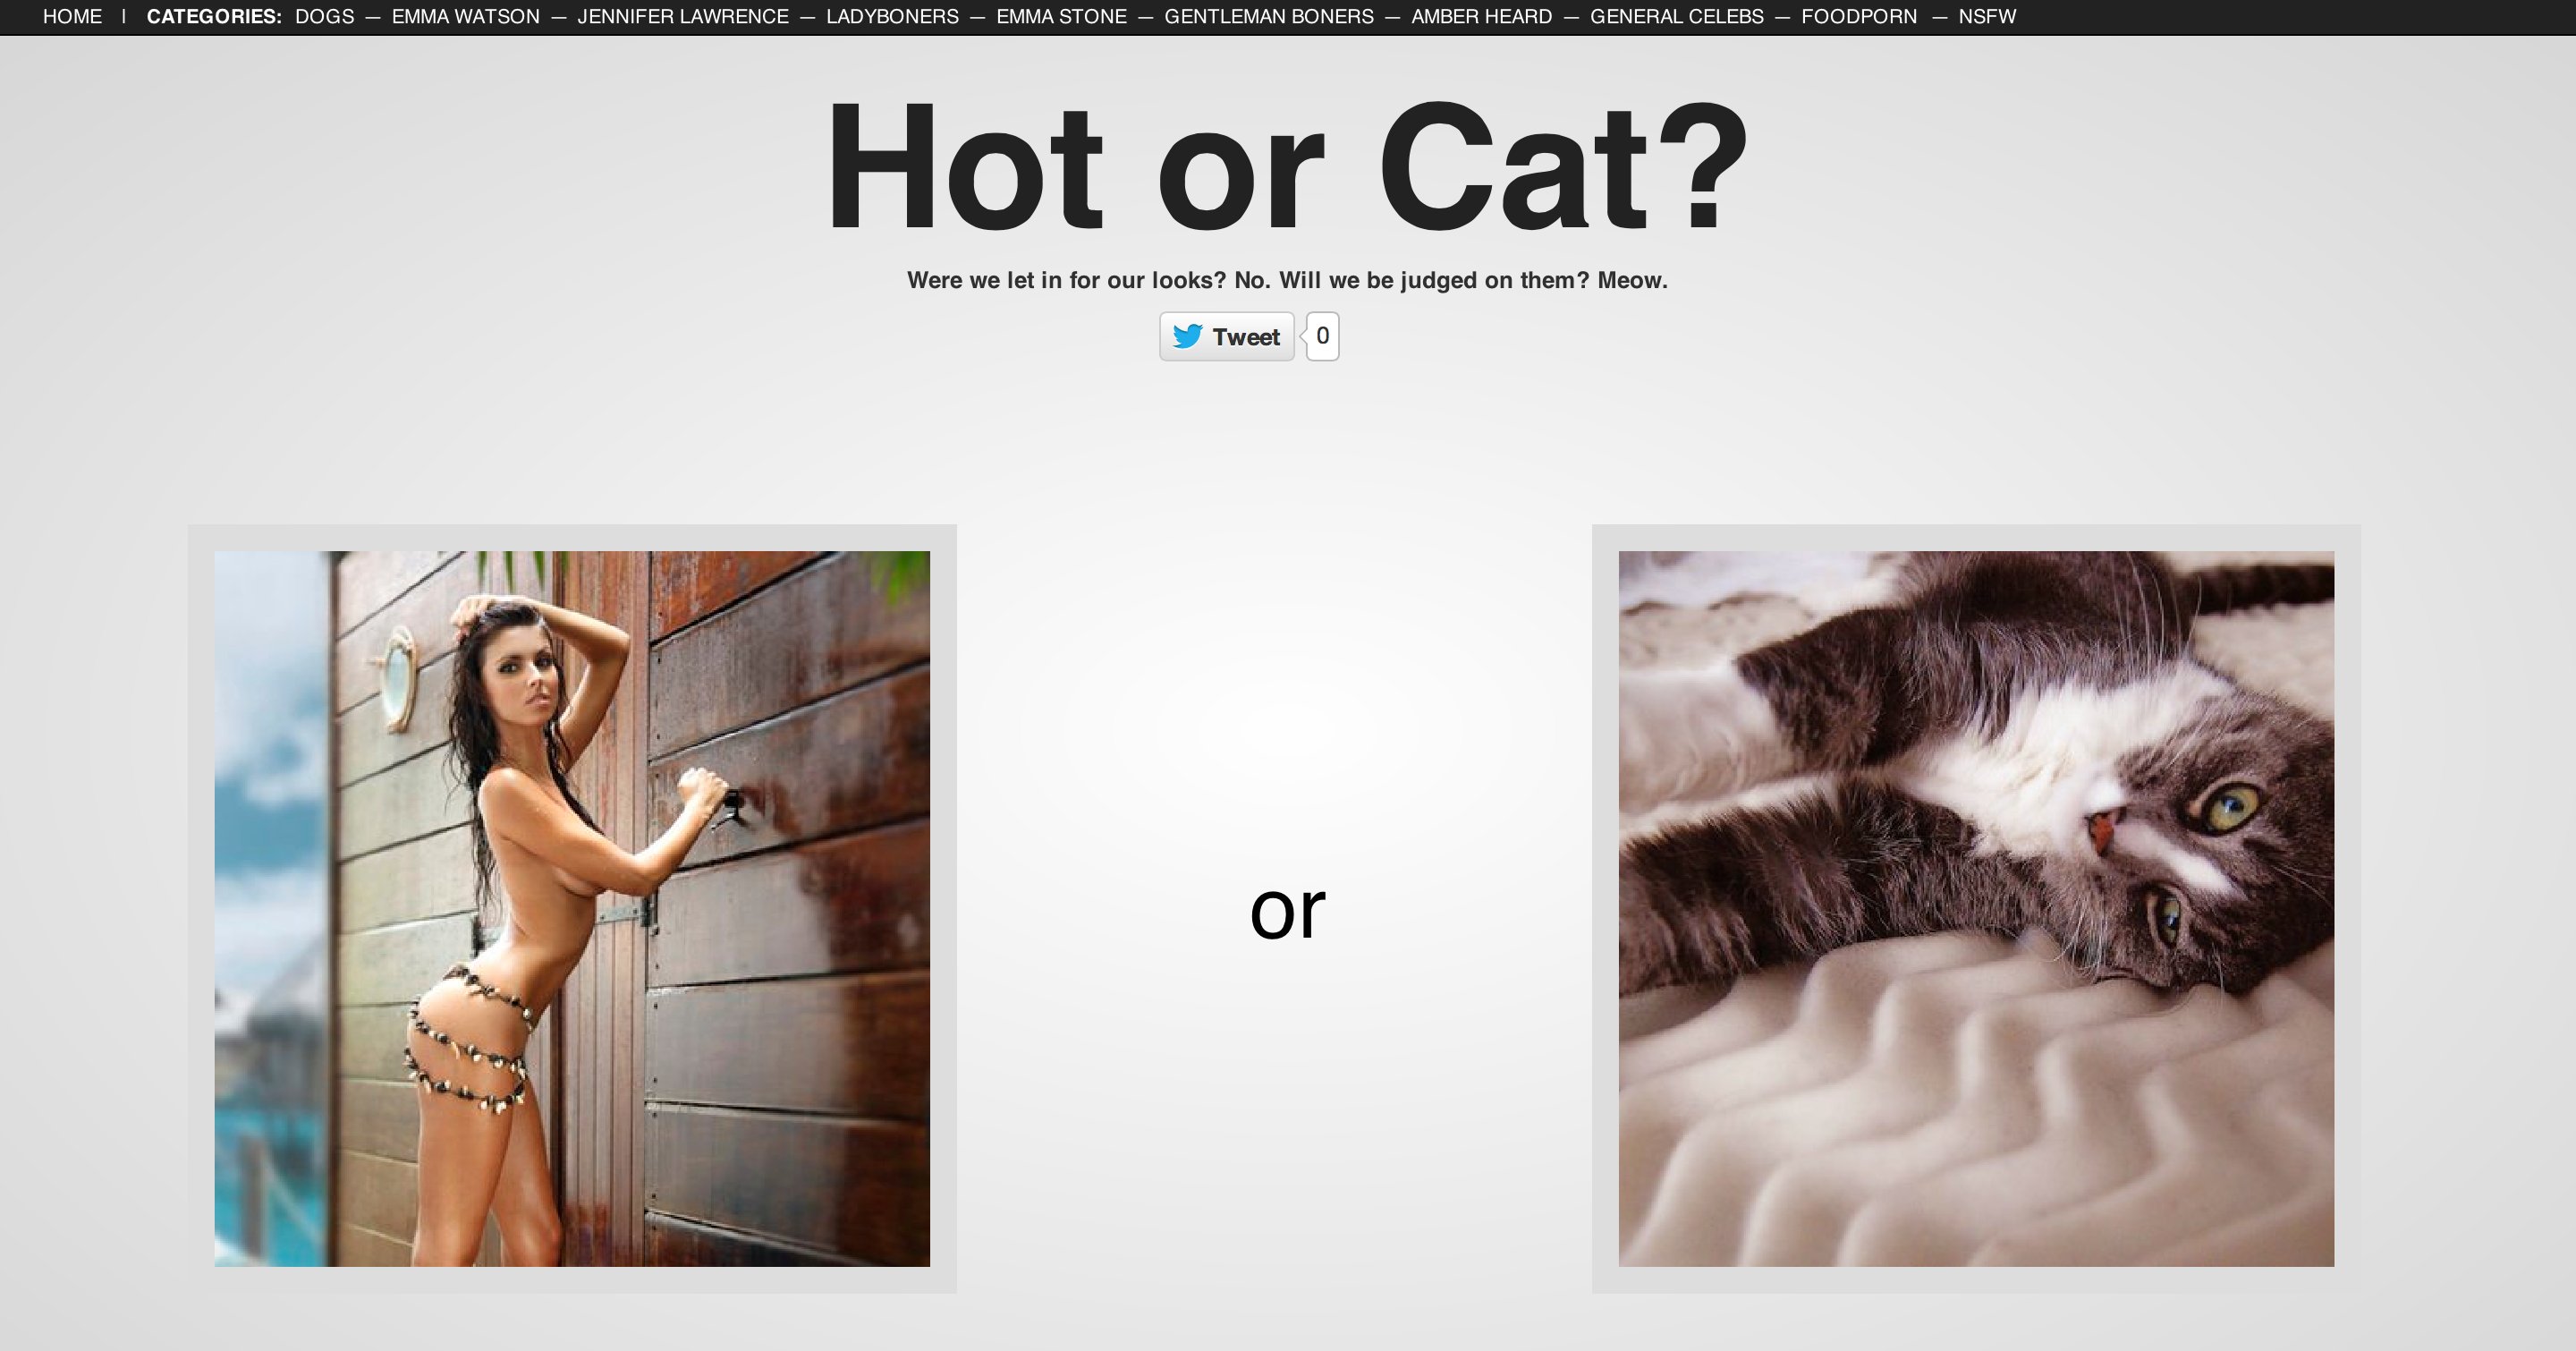 Hot women vs. cats. Very addictive.